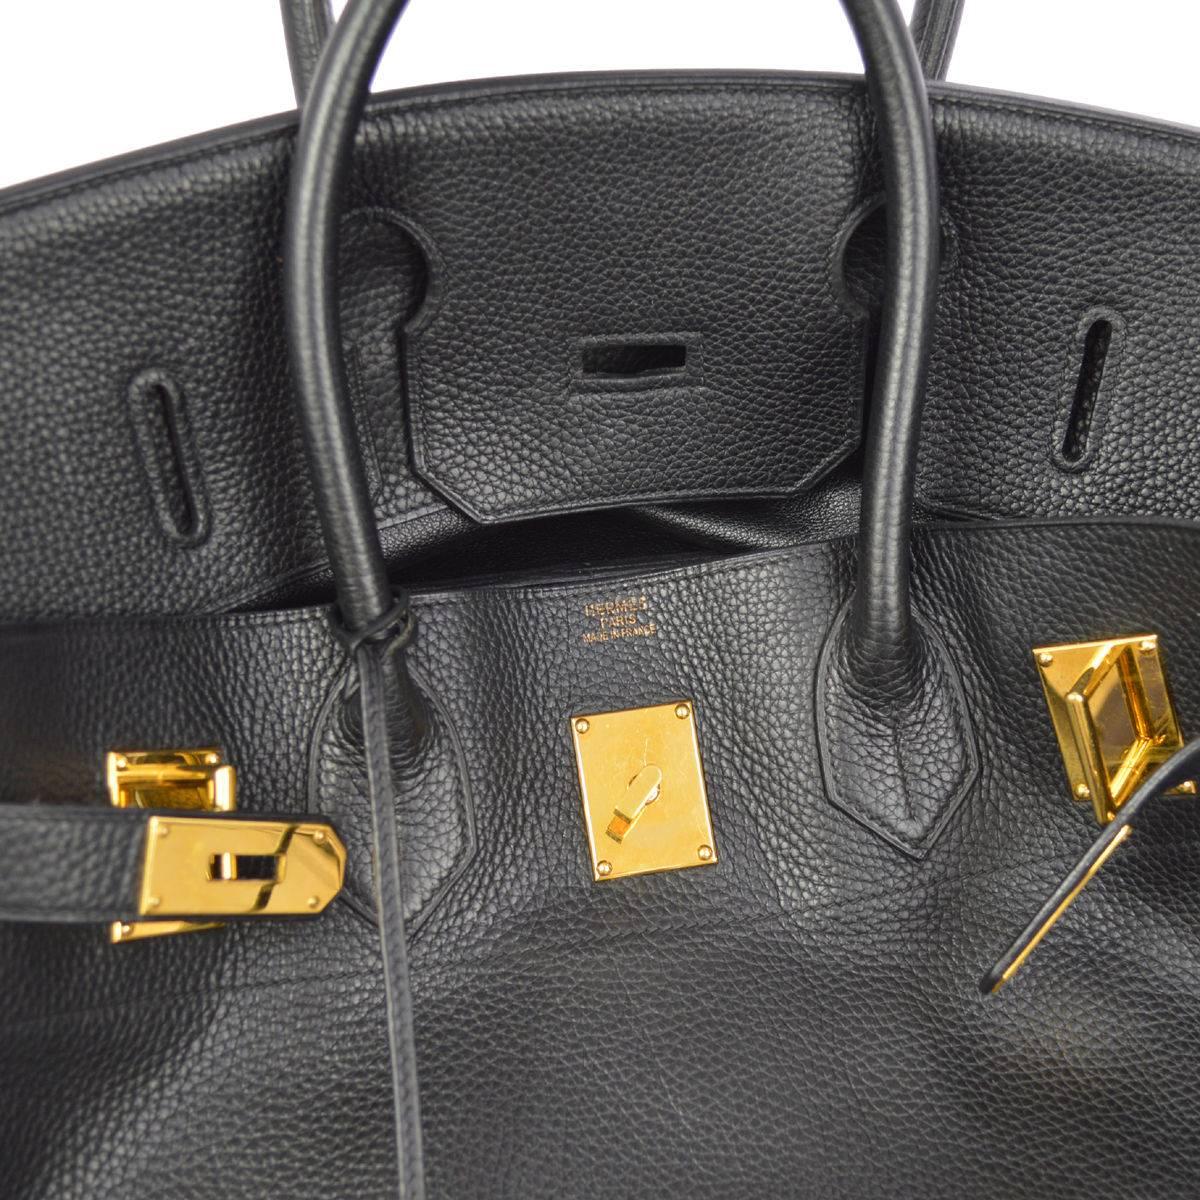 Women's Hermes Birkin Black Leather Gold Hardware Top Handle Satchel Bag and Accessories